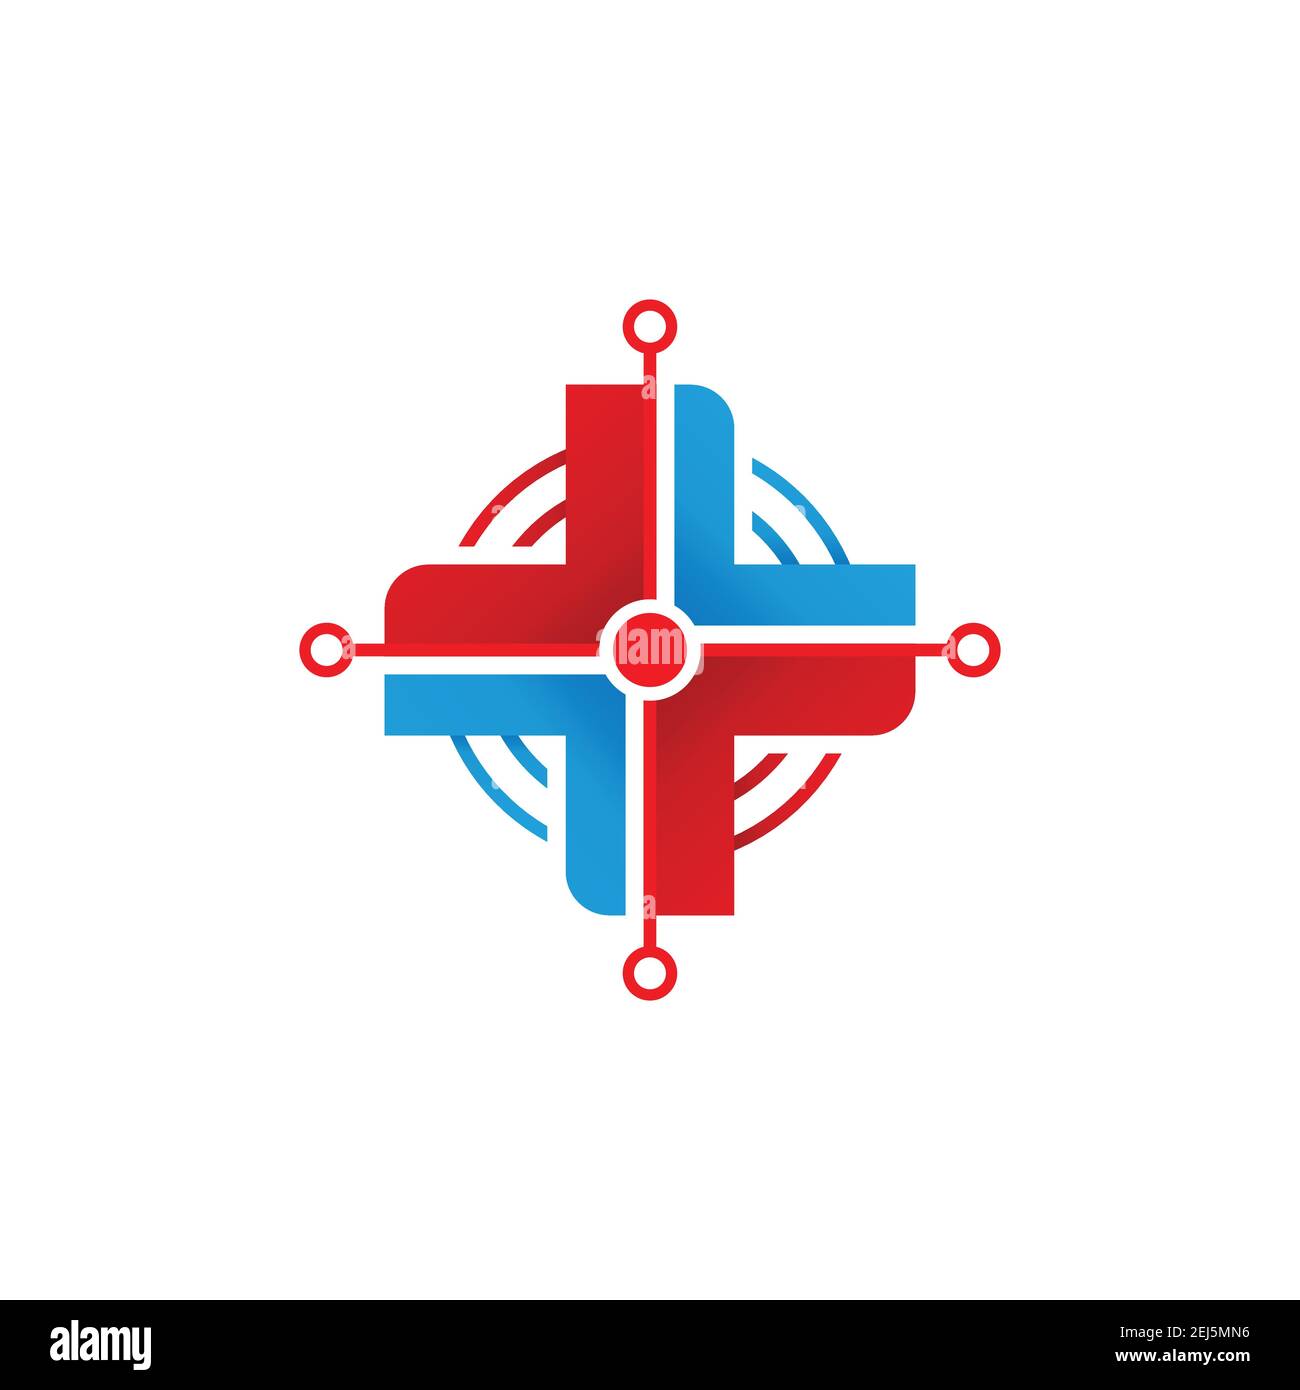 Creative medical cross gradient color logo design image. Medical cross with target icon logo creative modern design healthy logo Stock Vector